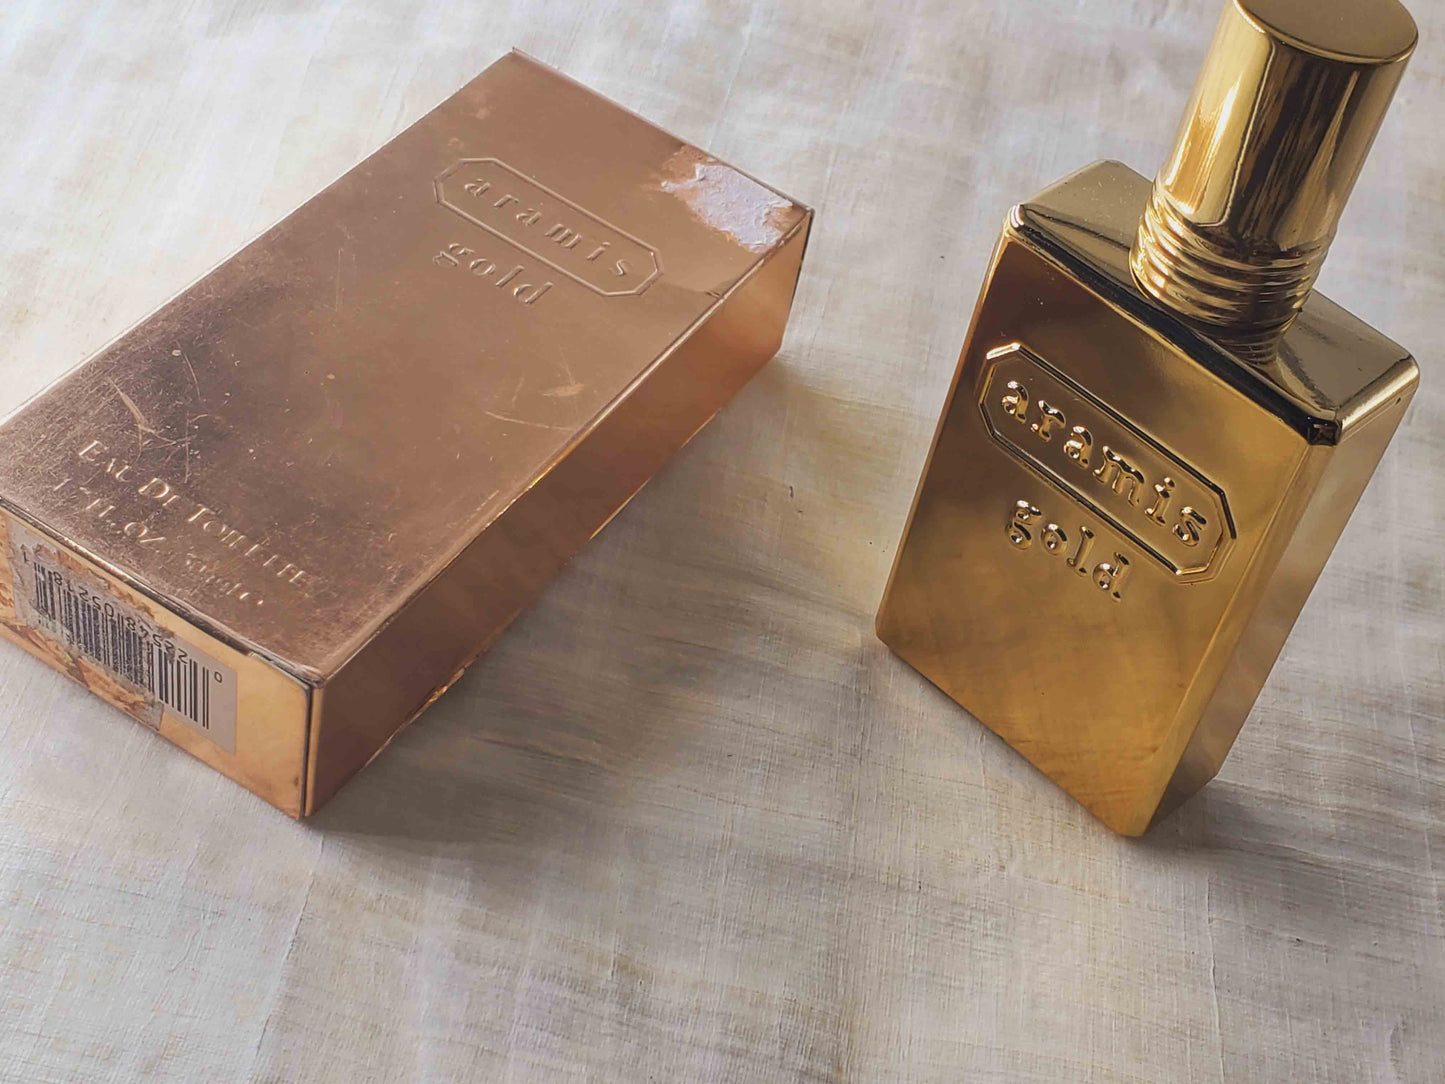 Aramis Gold By Aramis Men Cologne EDT Spray 50 ml 1.7 oz, Vintage, Rare